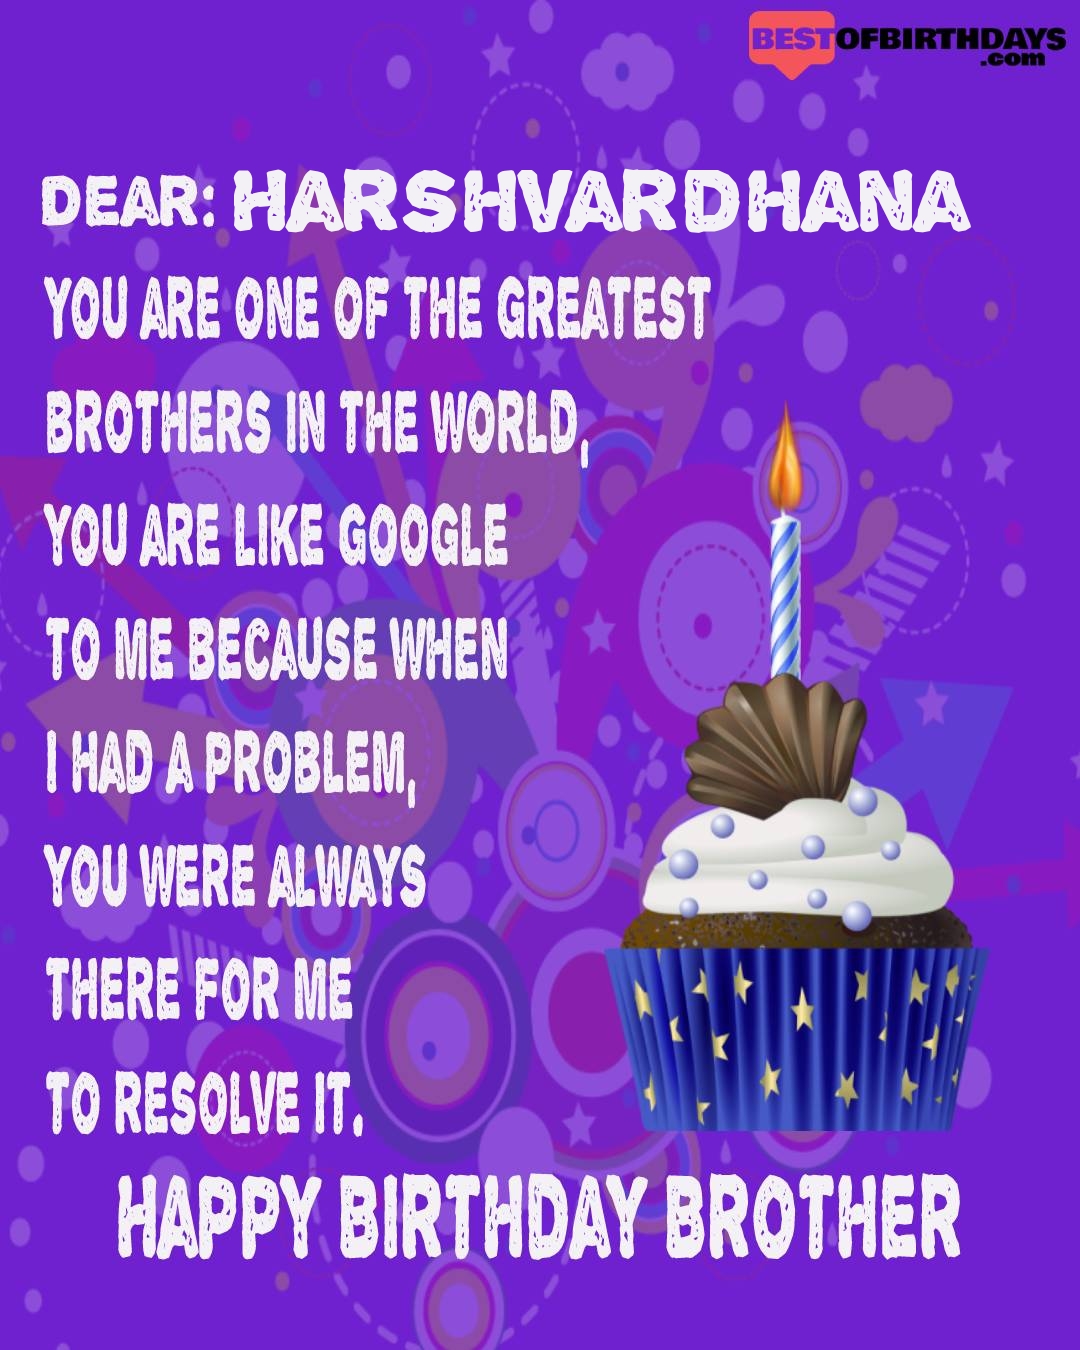 Happy birthday harshvardhana bhai brother bro